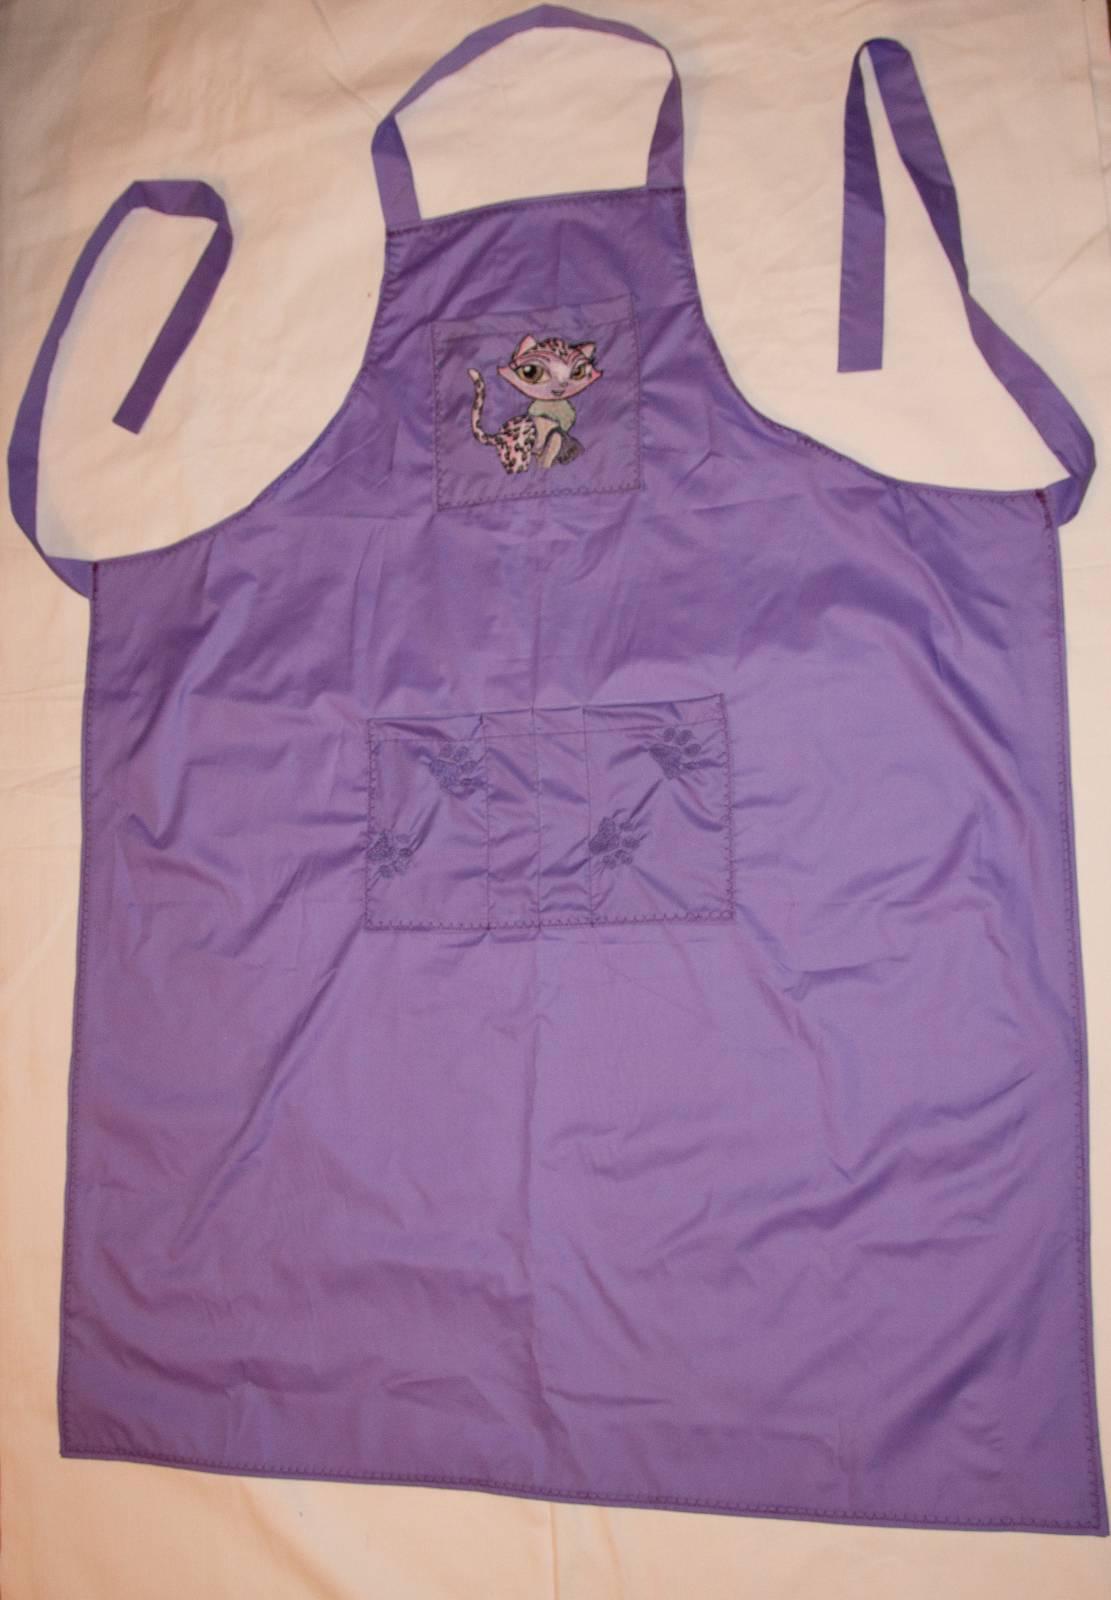 Kitchen apron with Brigitte Kitty embroidery design